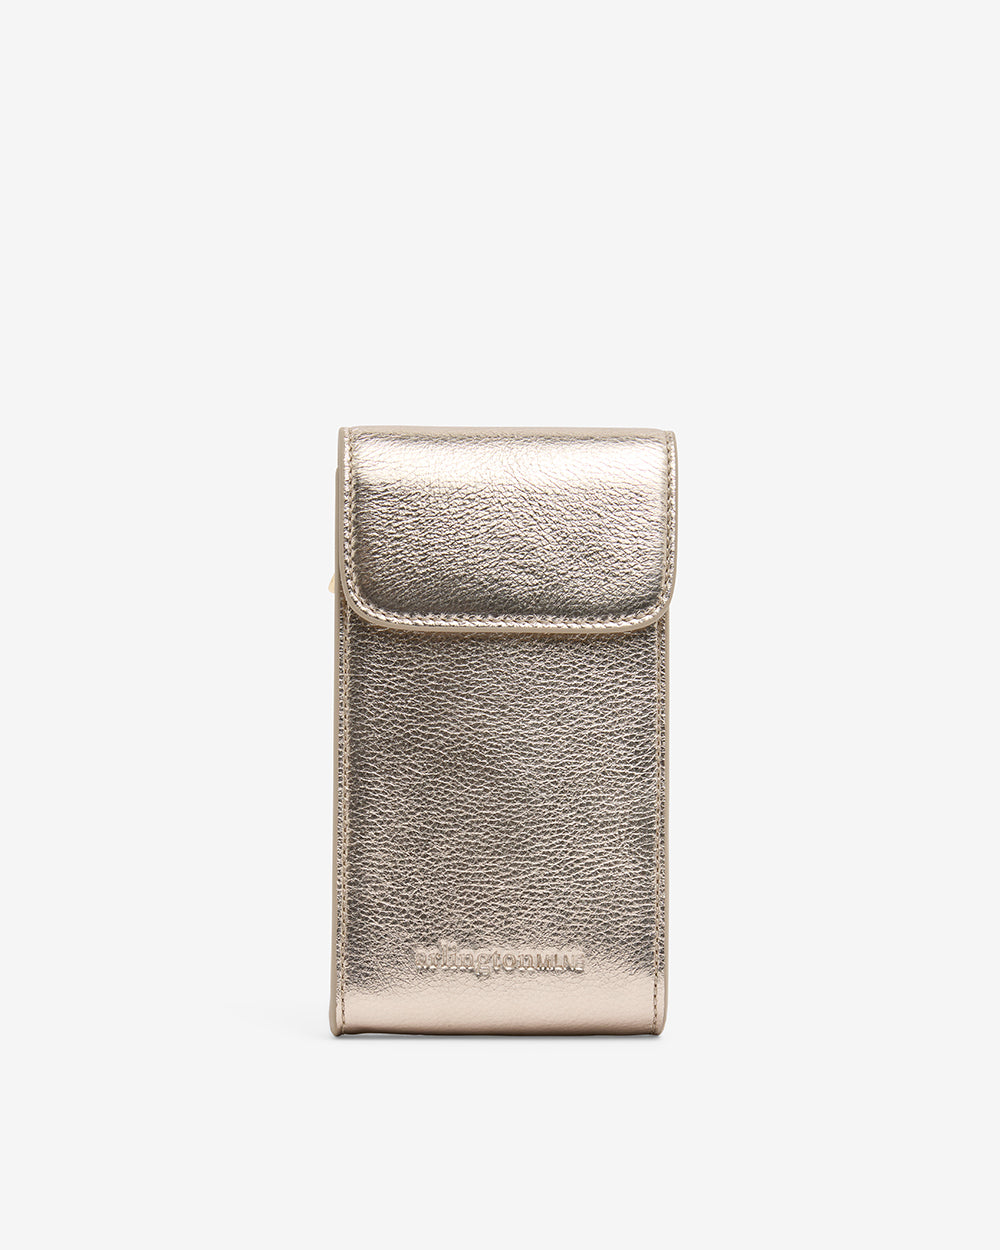 Celeste Phone Bag - Gold